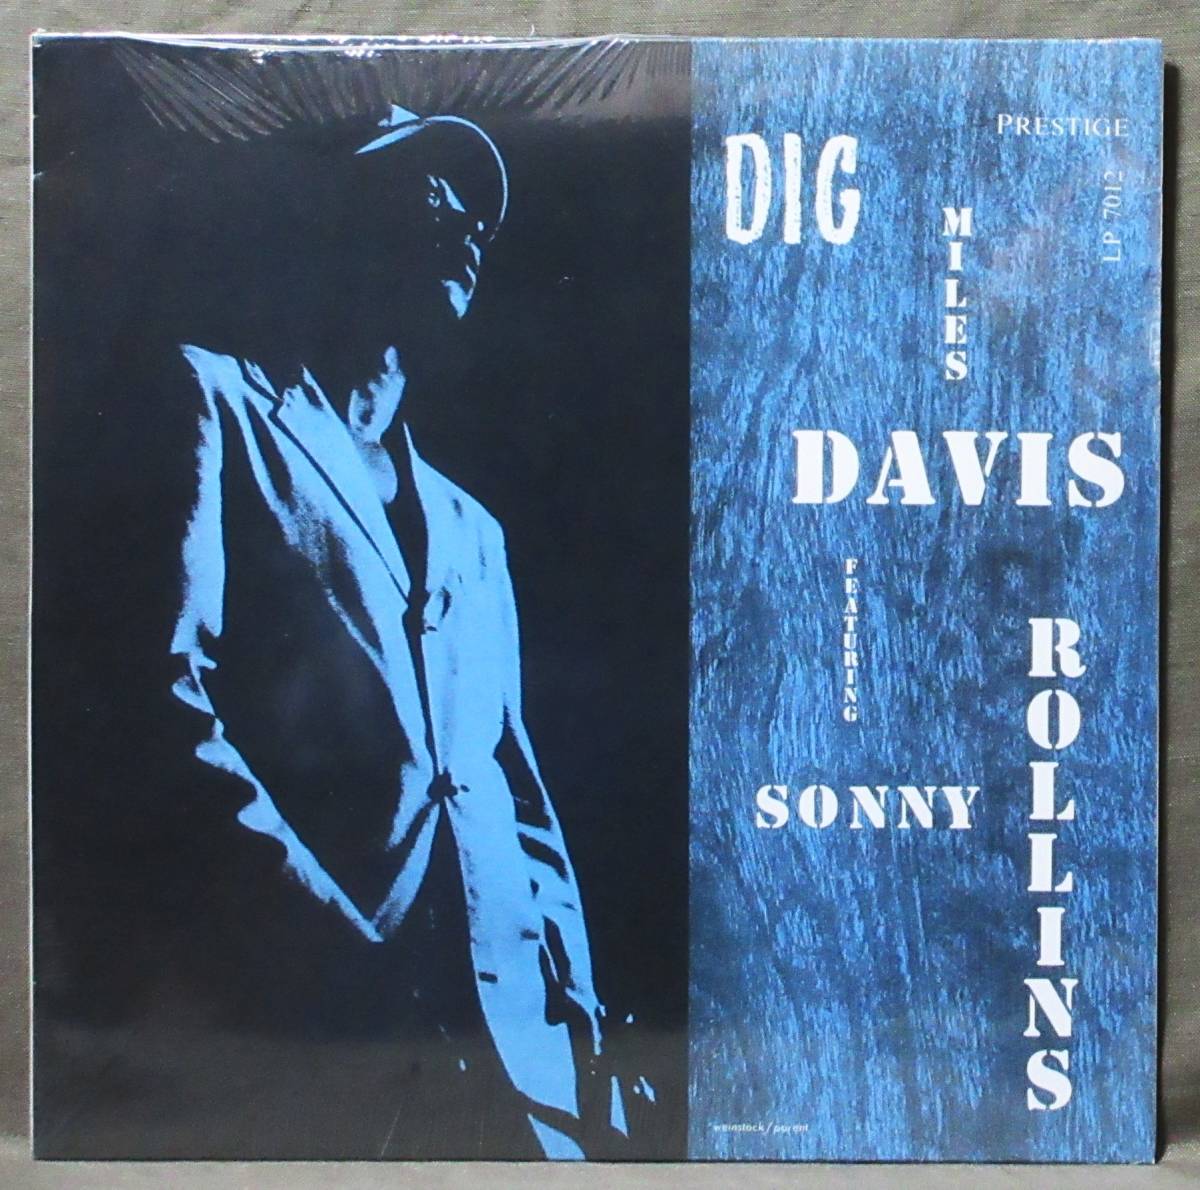 (LP) 未開封OJC MILES DAVIS Featuring SONNY ROLLINS [DIG] Jackie McLean/Art Blakey/シールド新品/OJC-005(PR-7012)_画像1